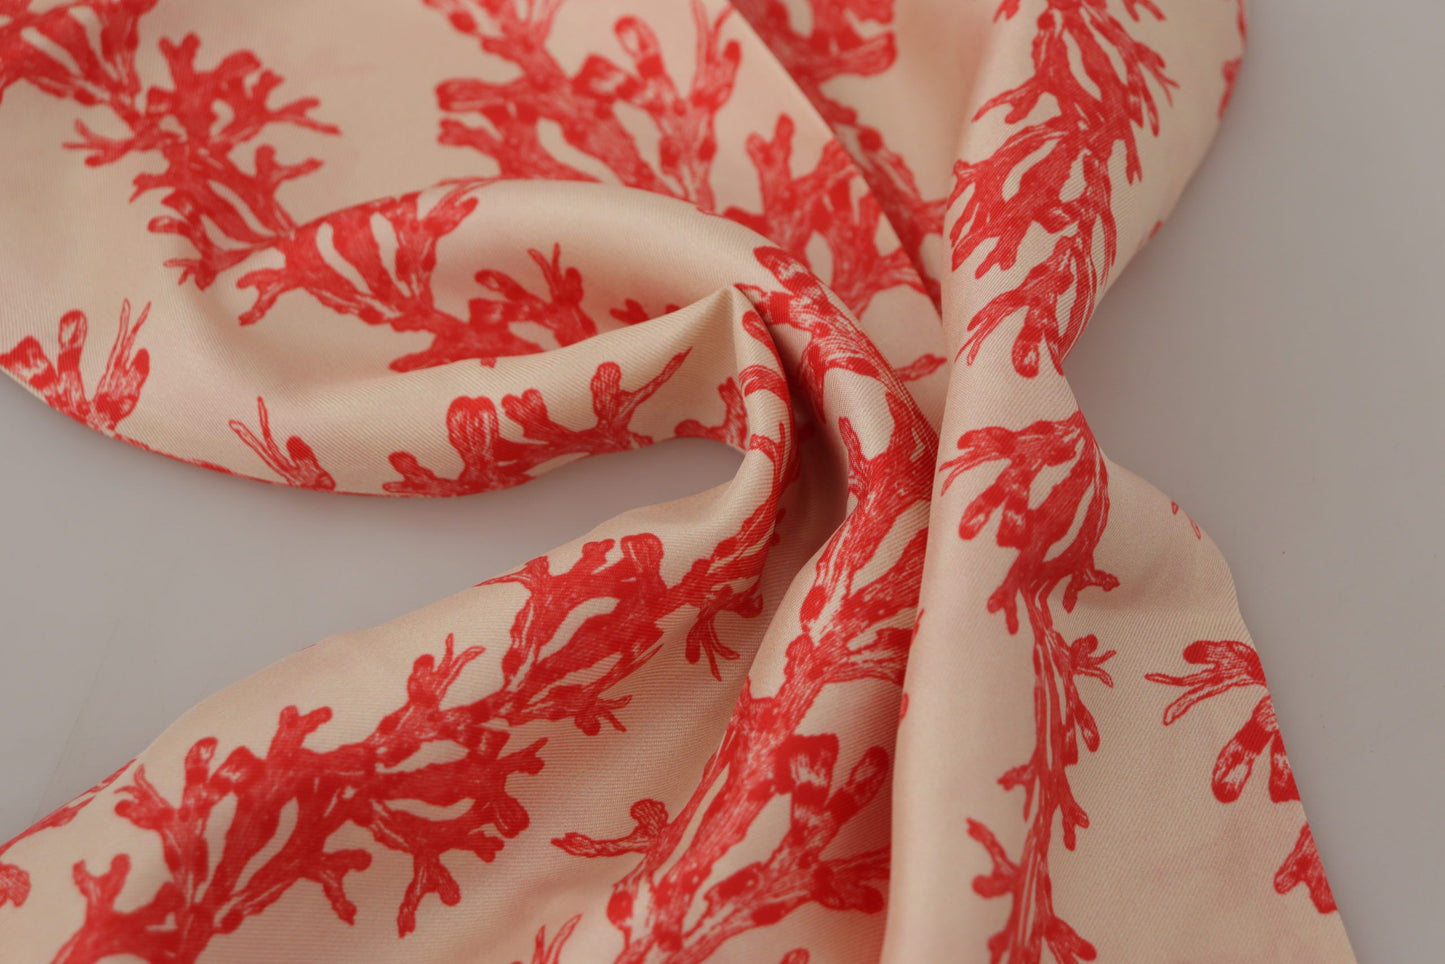 Dolce & Gabbana Elegant Silk Men's Scarf Wrap - Red Coral Print